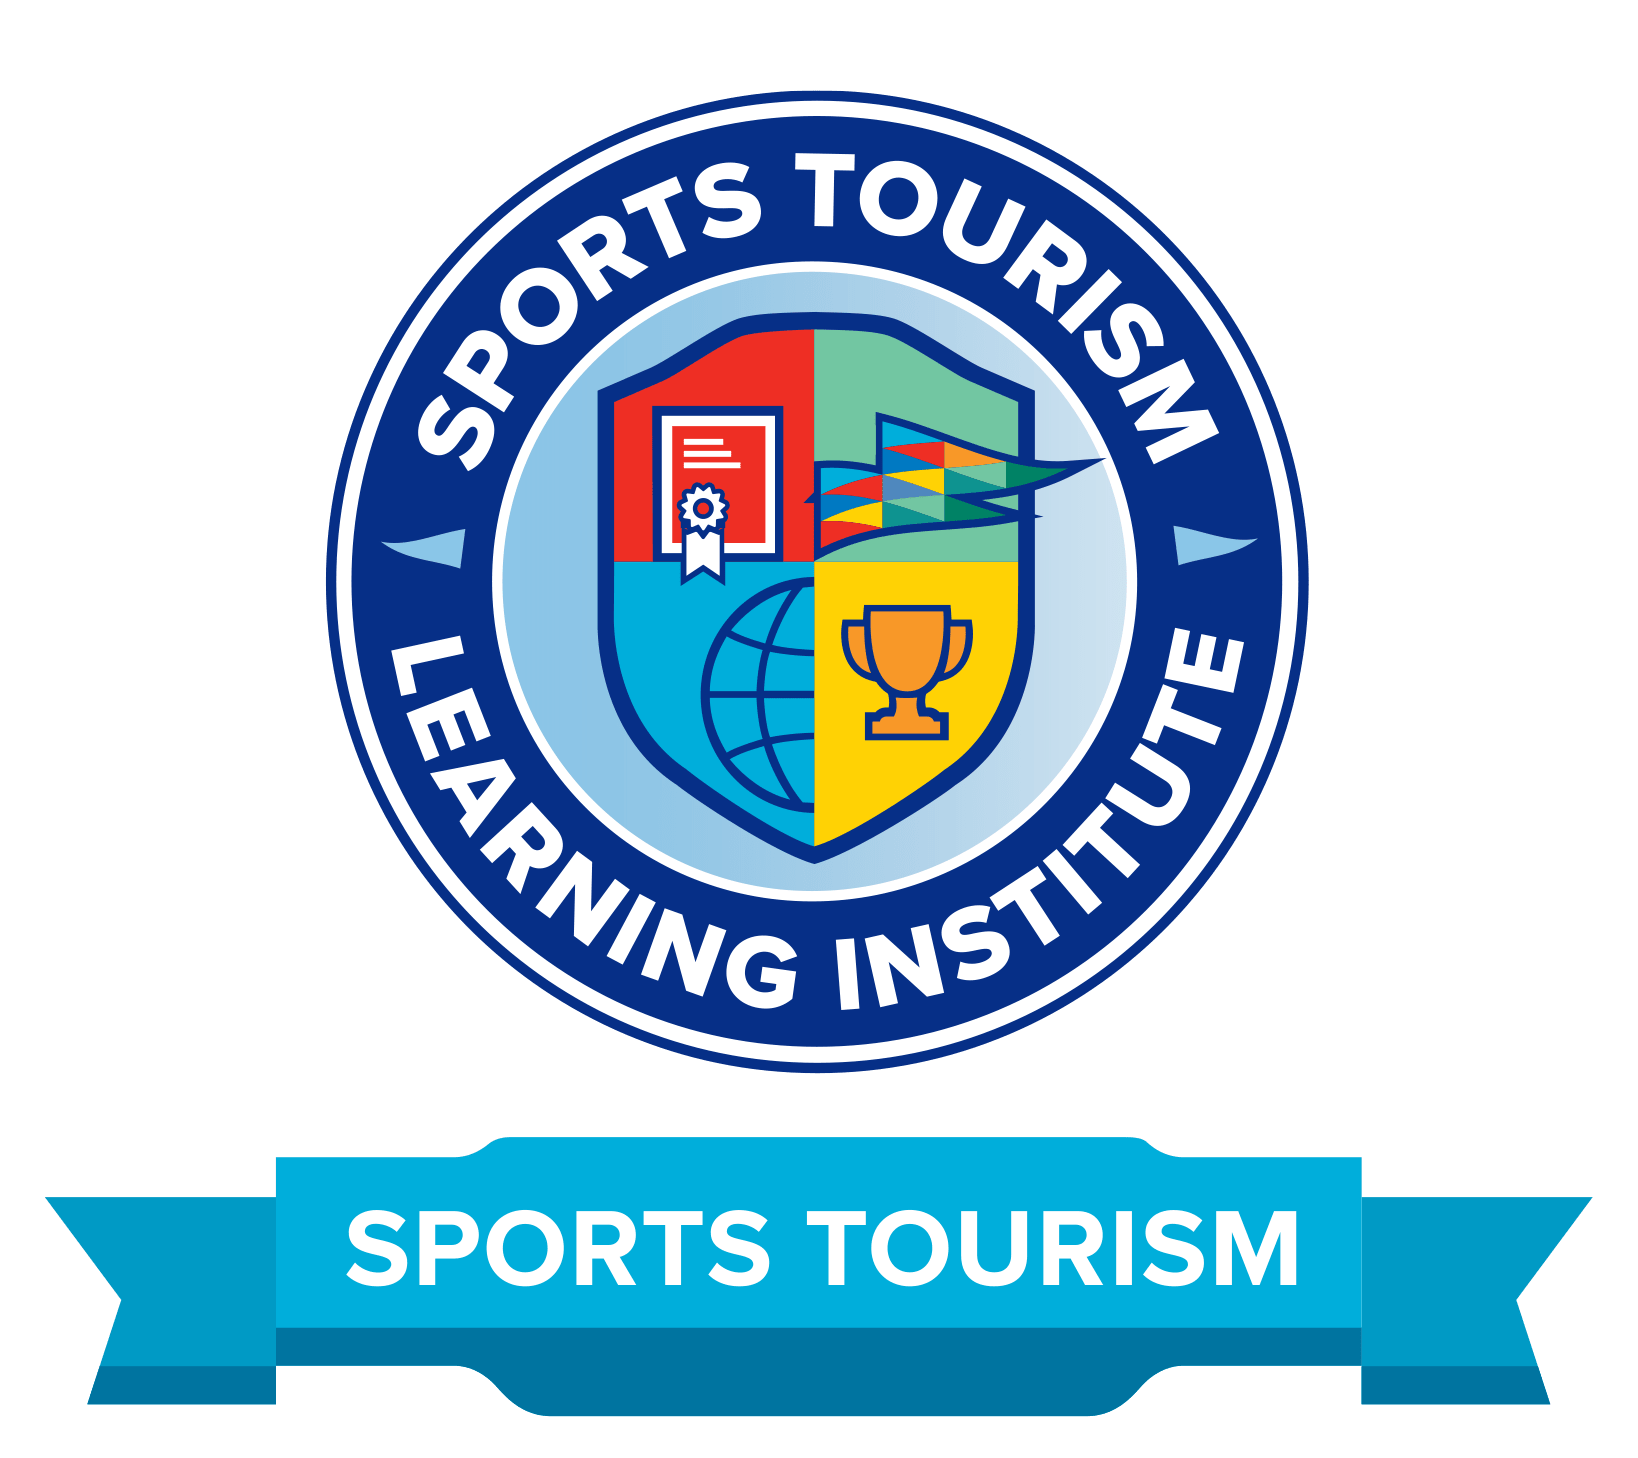 kategori sport tourism